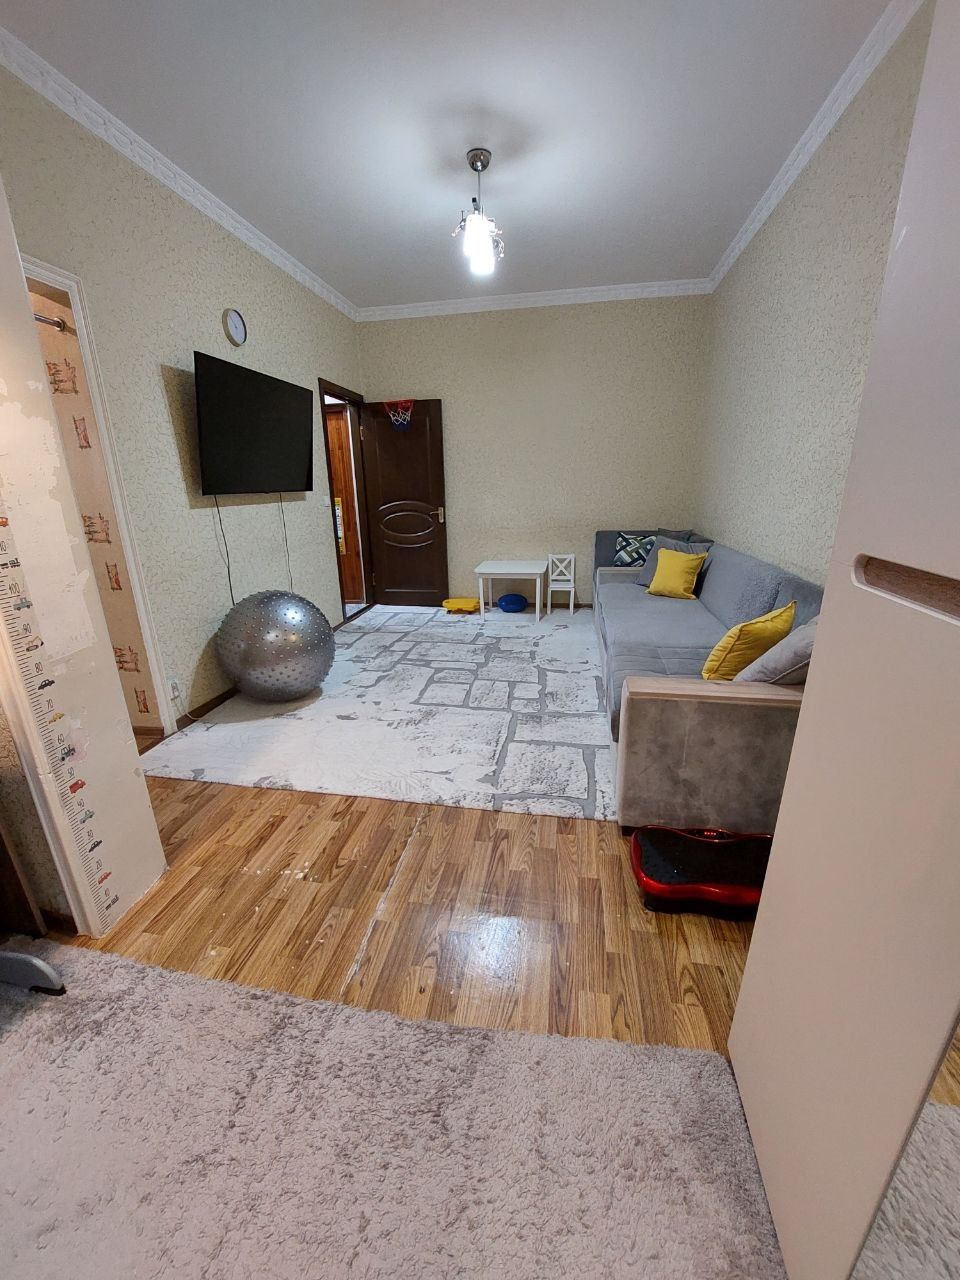 Продаётся 2-х комнатная квартира в Чиланзарском районе.